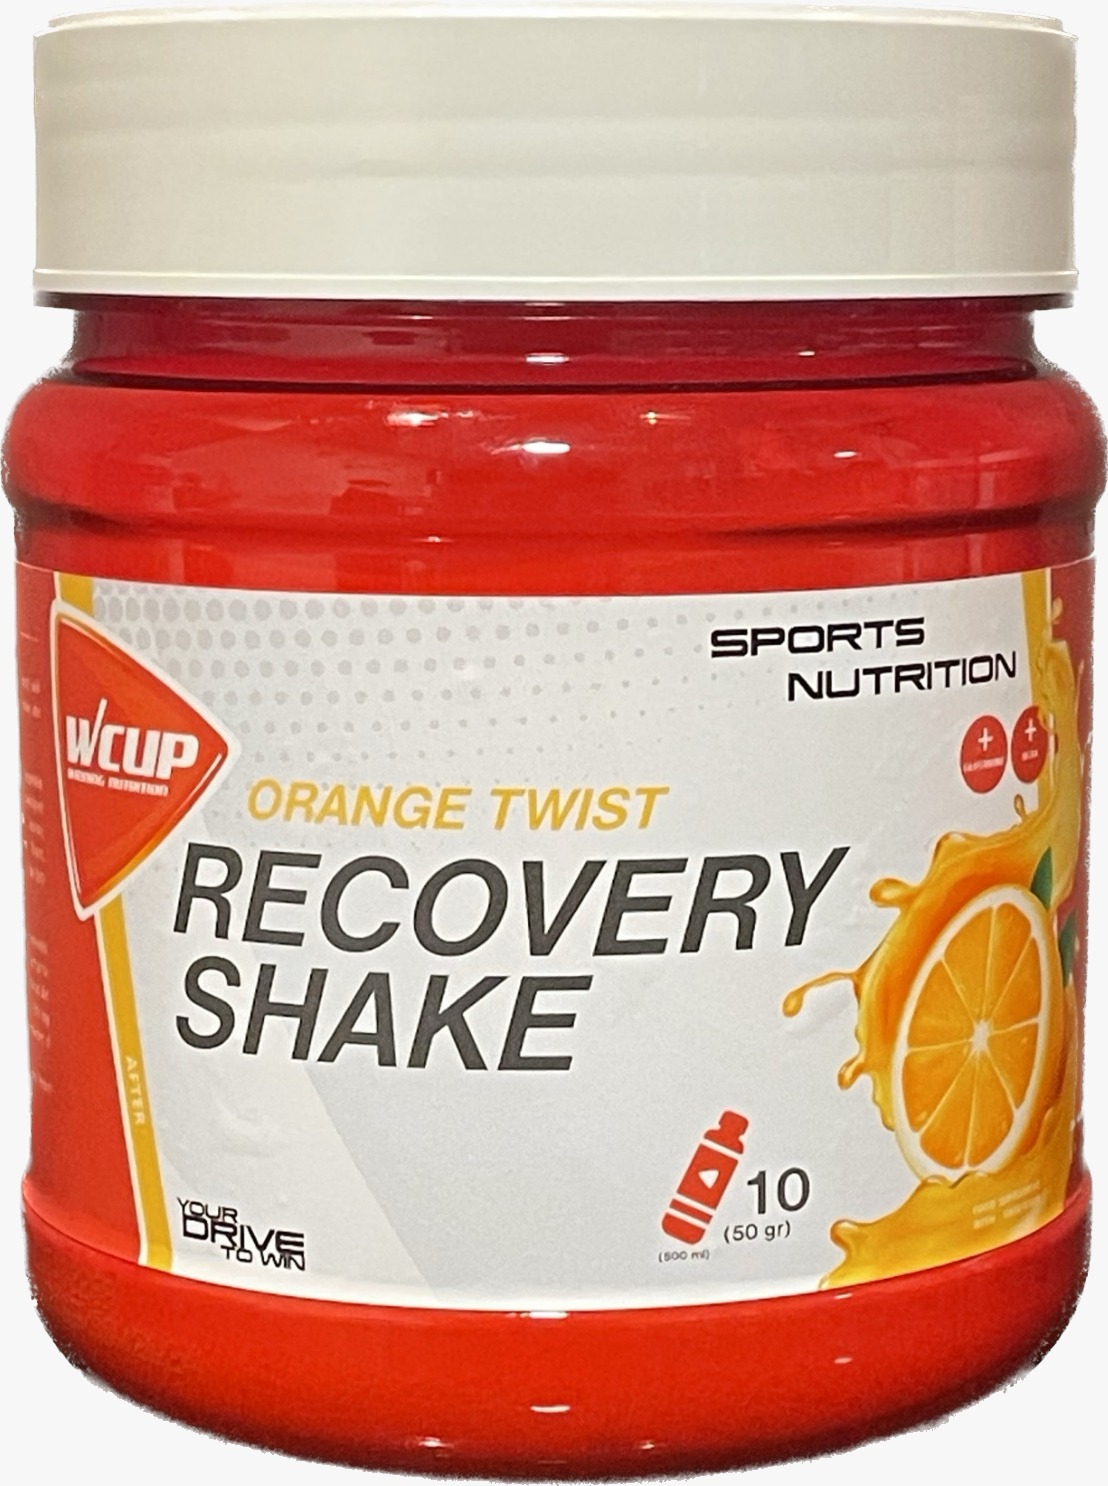 WCUP Recovery Shake Orange Twist